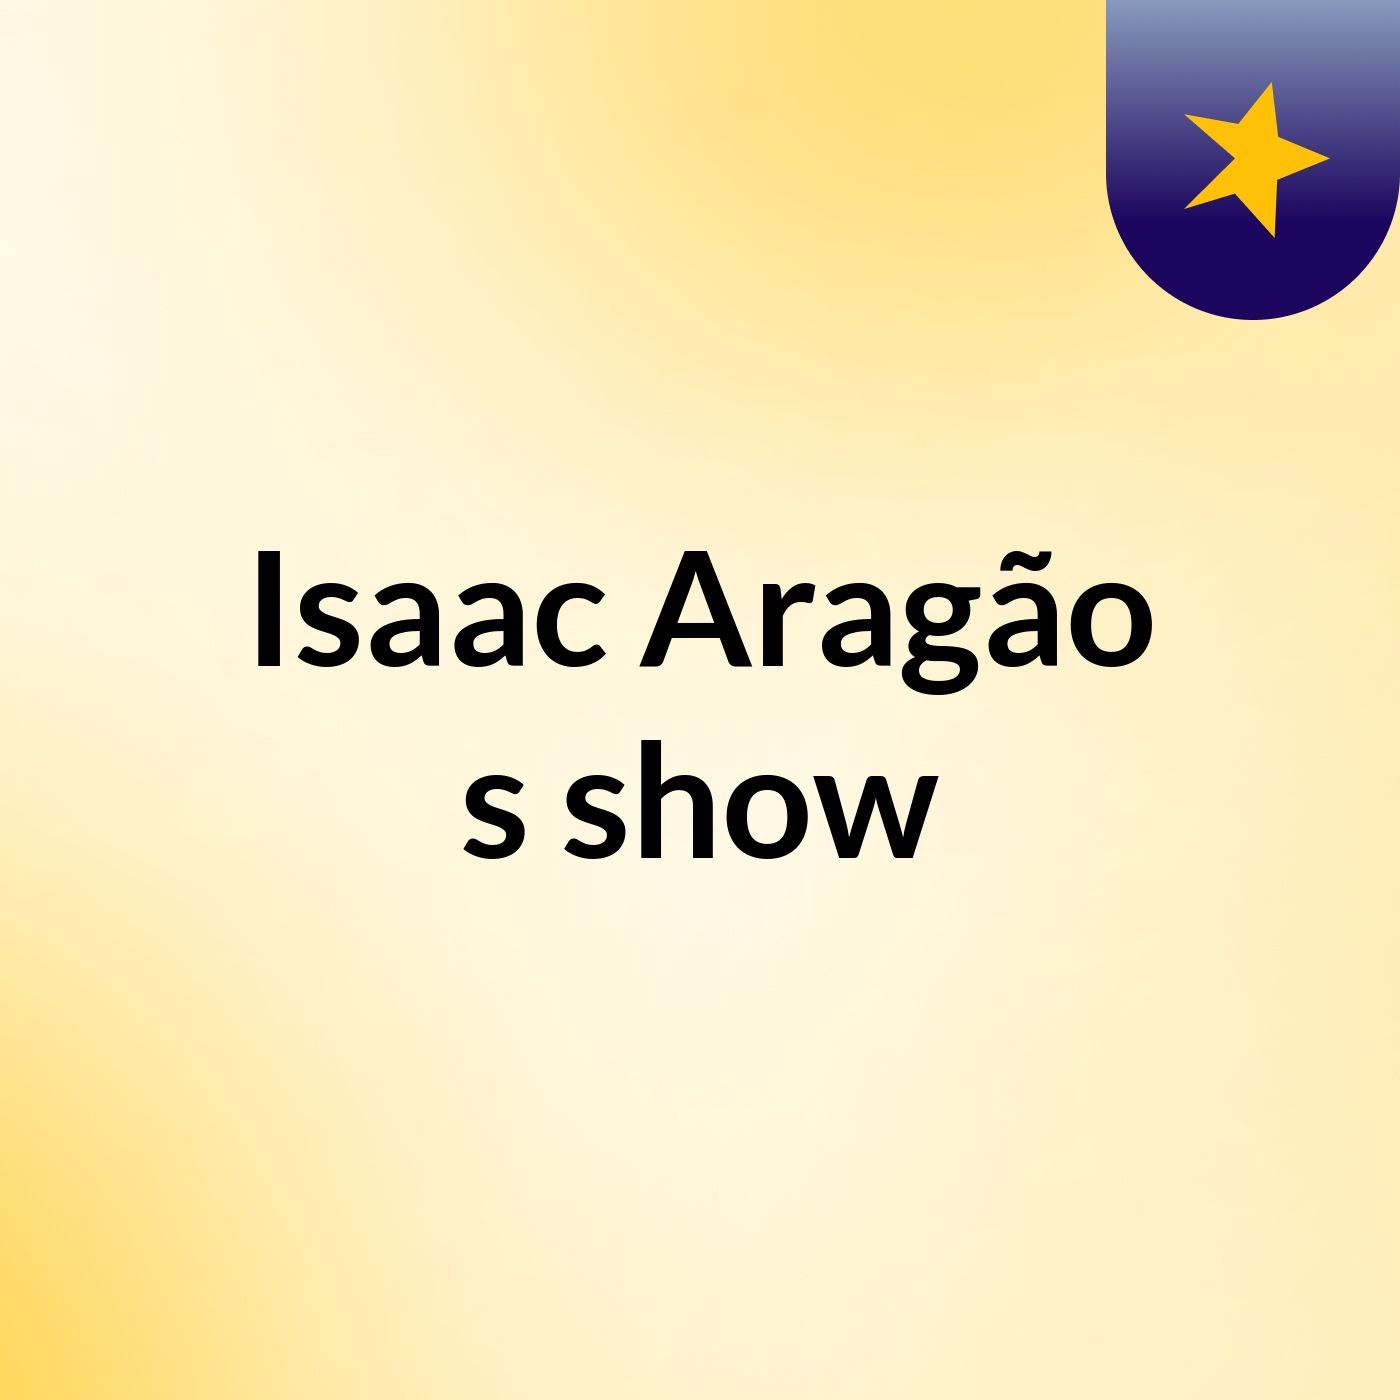 Isaac Aragão's show